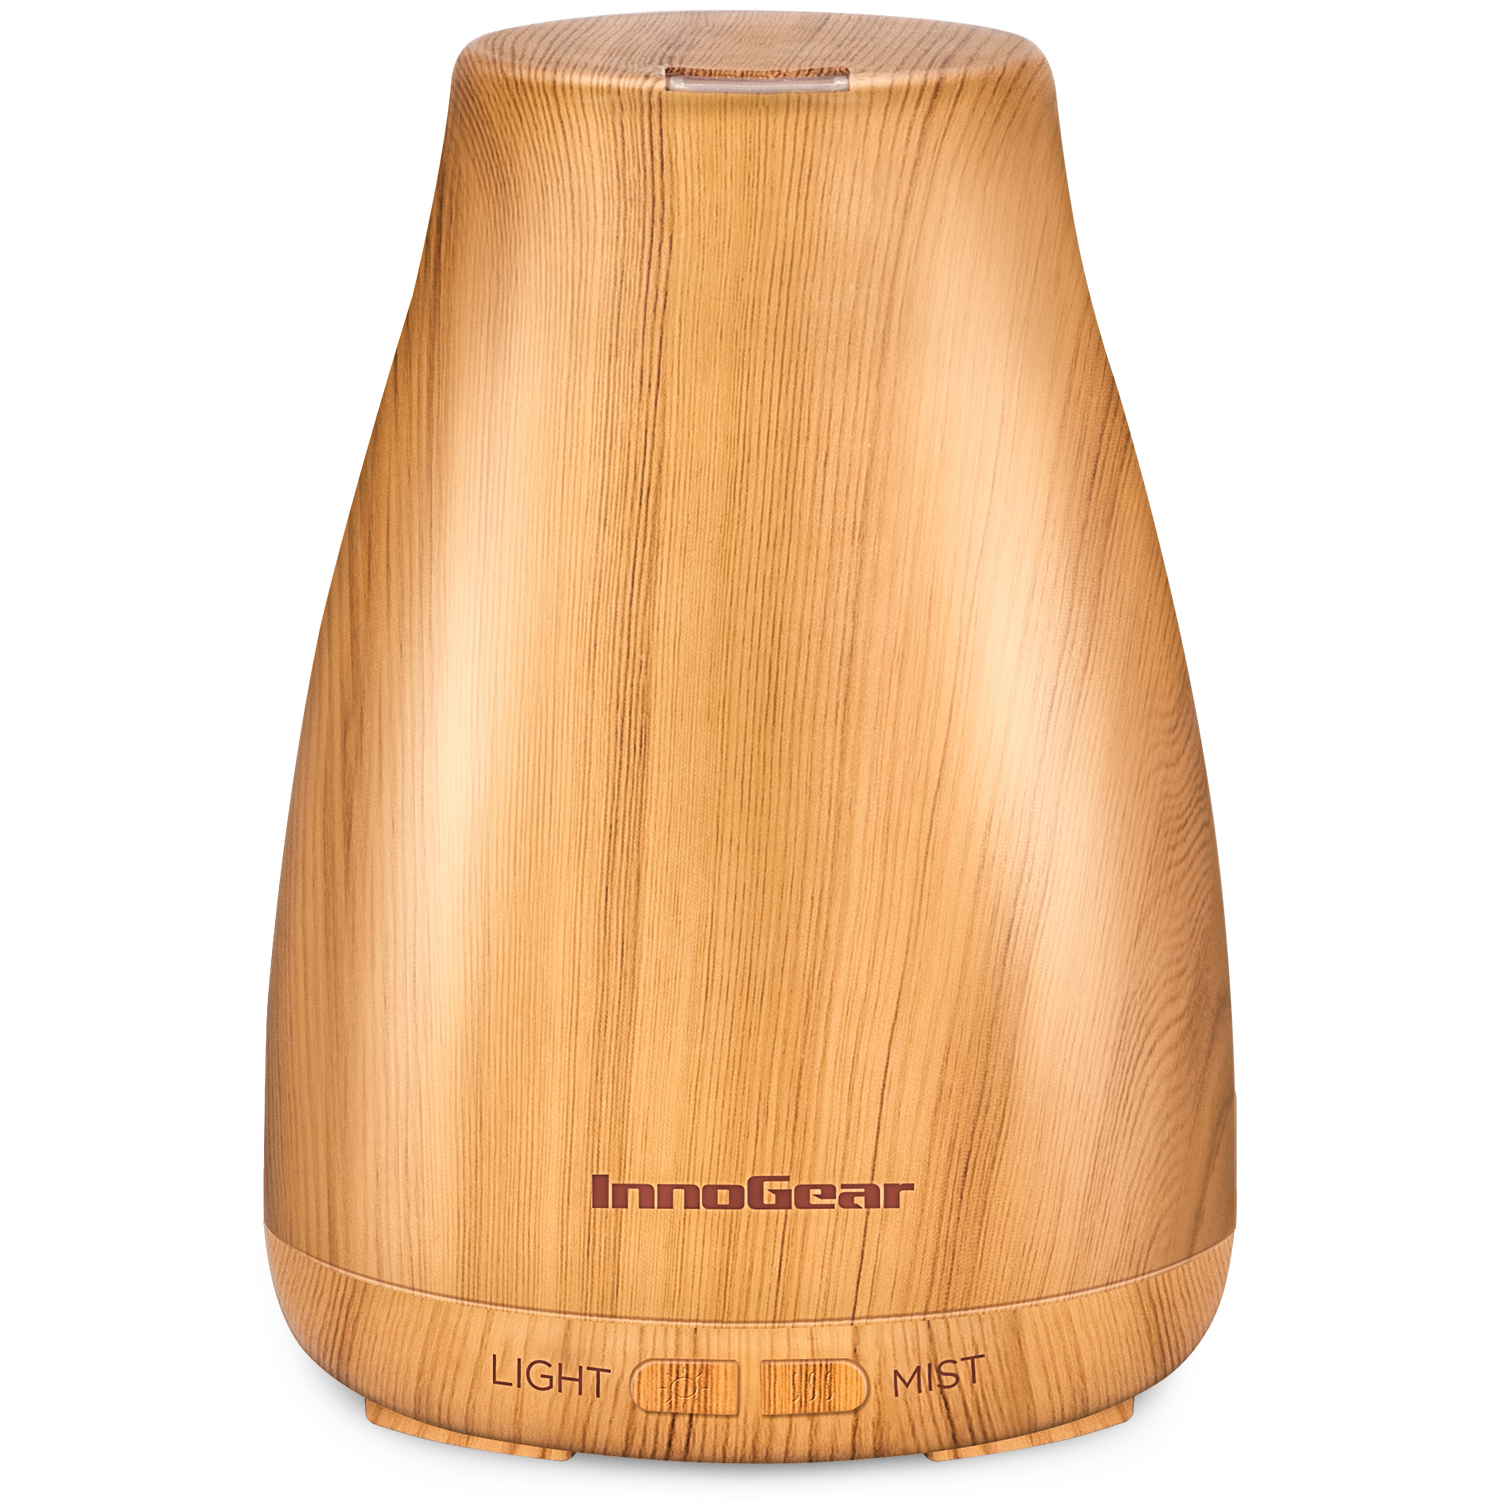 InnoGear 100ml Wood Grain Diffuser, Light